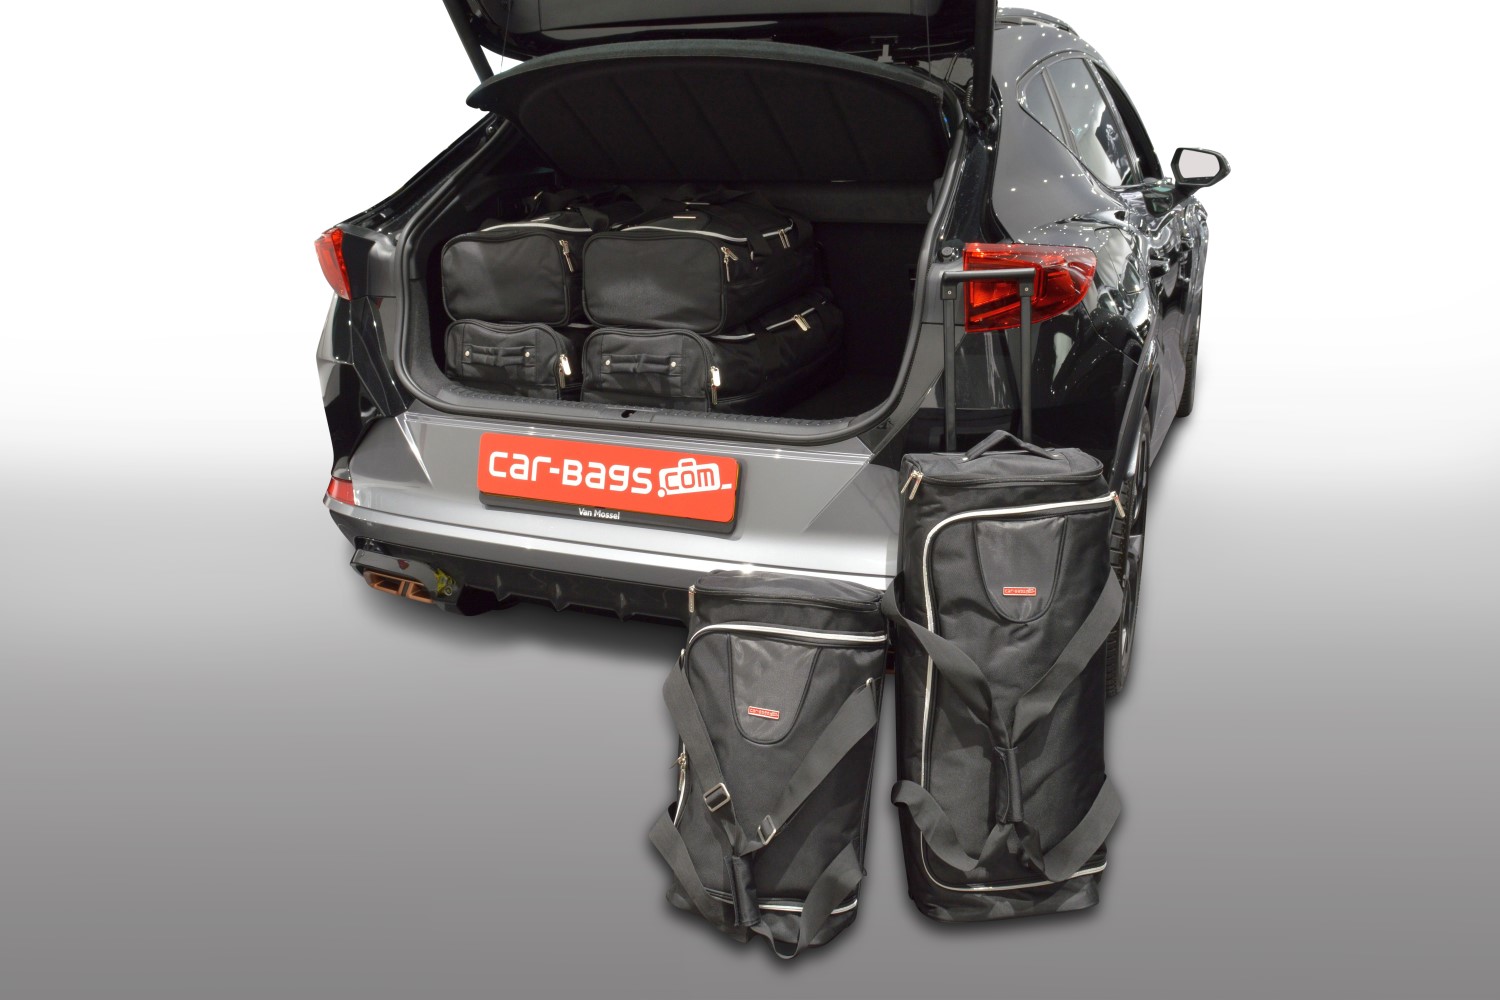 https://www.car-bags.com/images/stories/virtuemart/product/c30401s-cupra-formentor-2020-car-bags-1.jpg